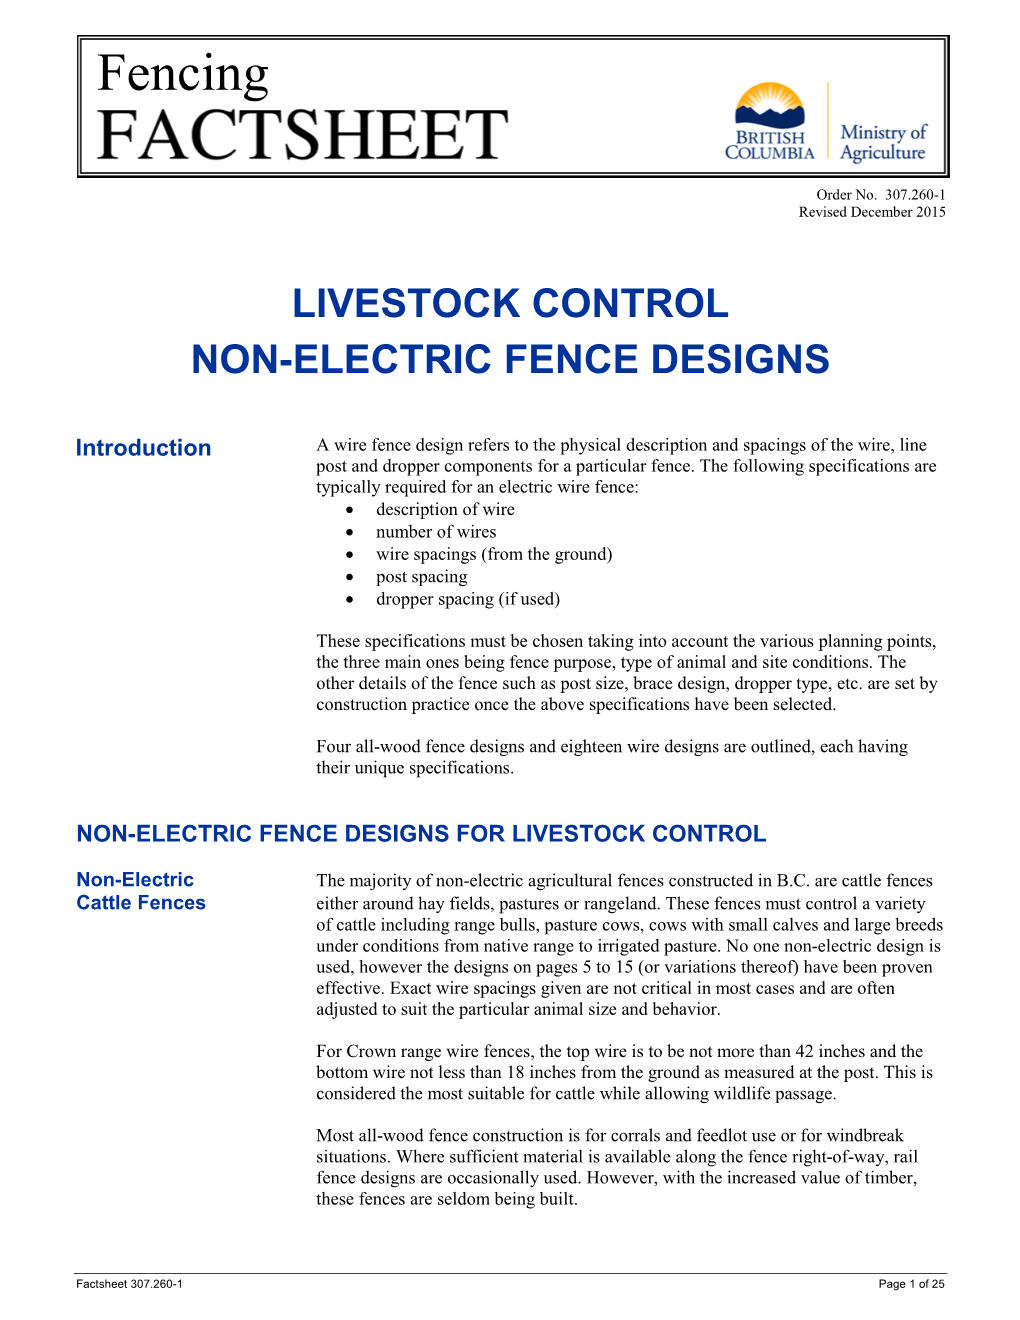 Livestock Control Non-Electric Fence Designs